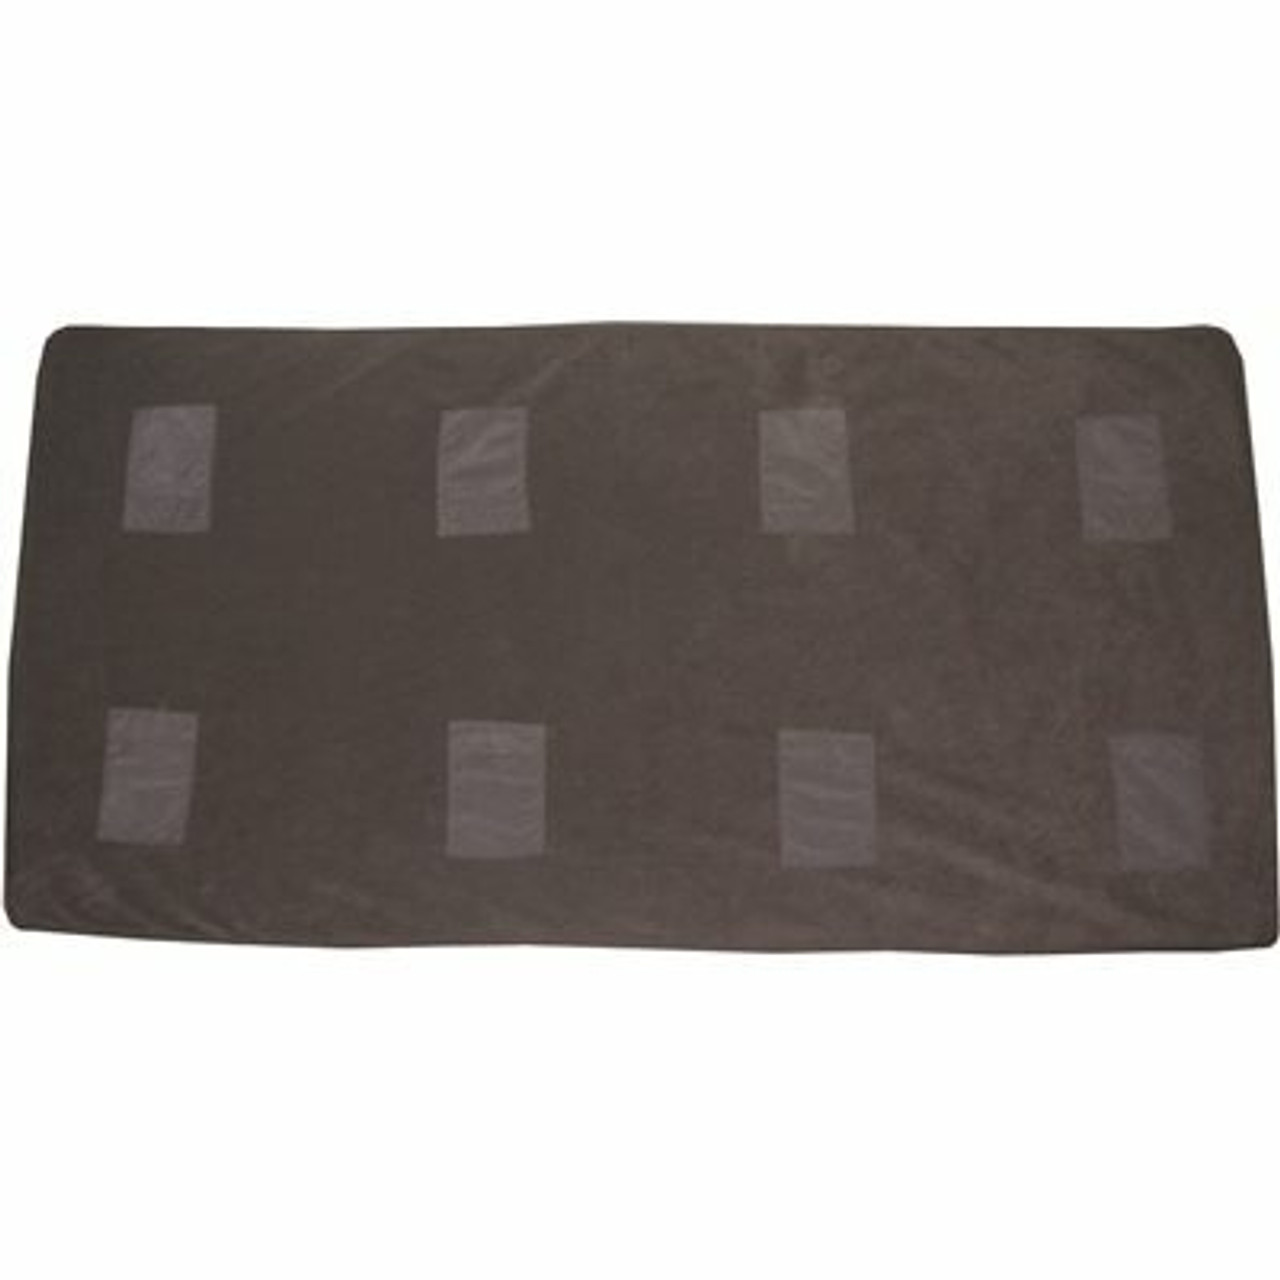 Hyperkewl Black Heated Emergency Blanket